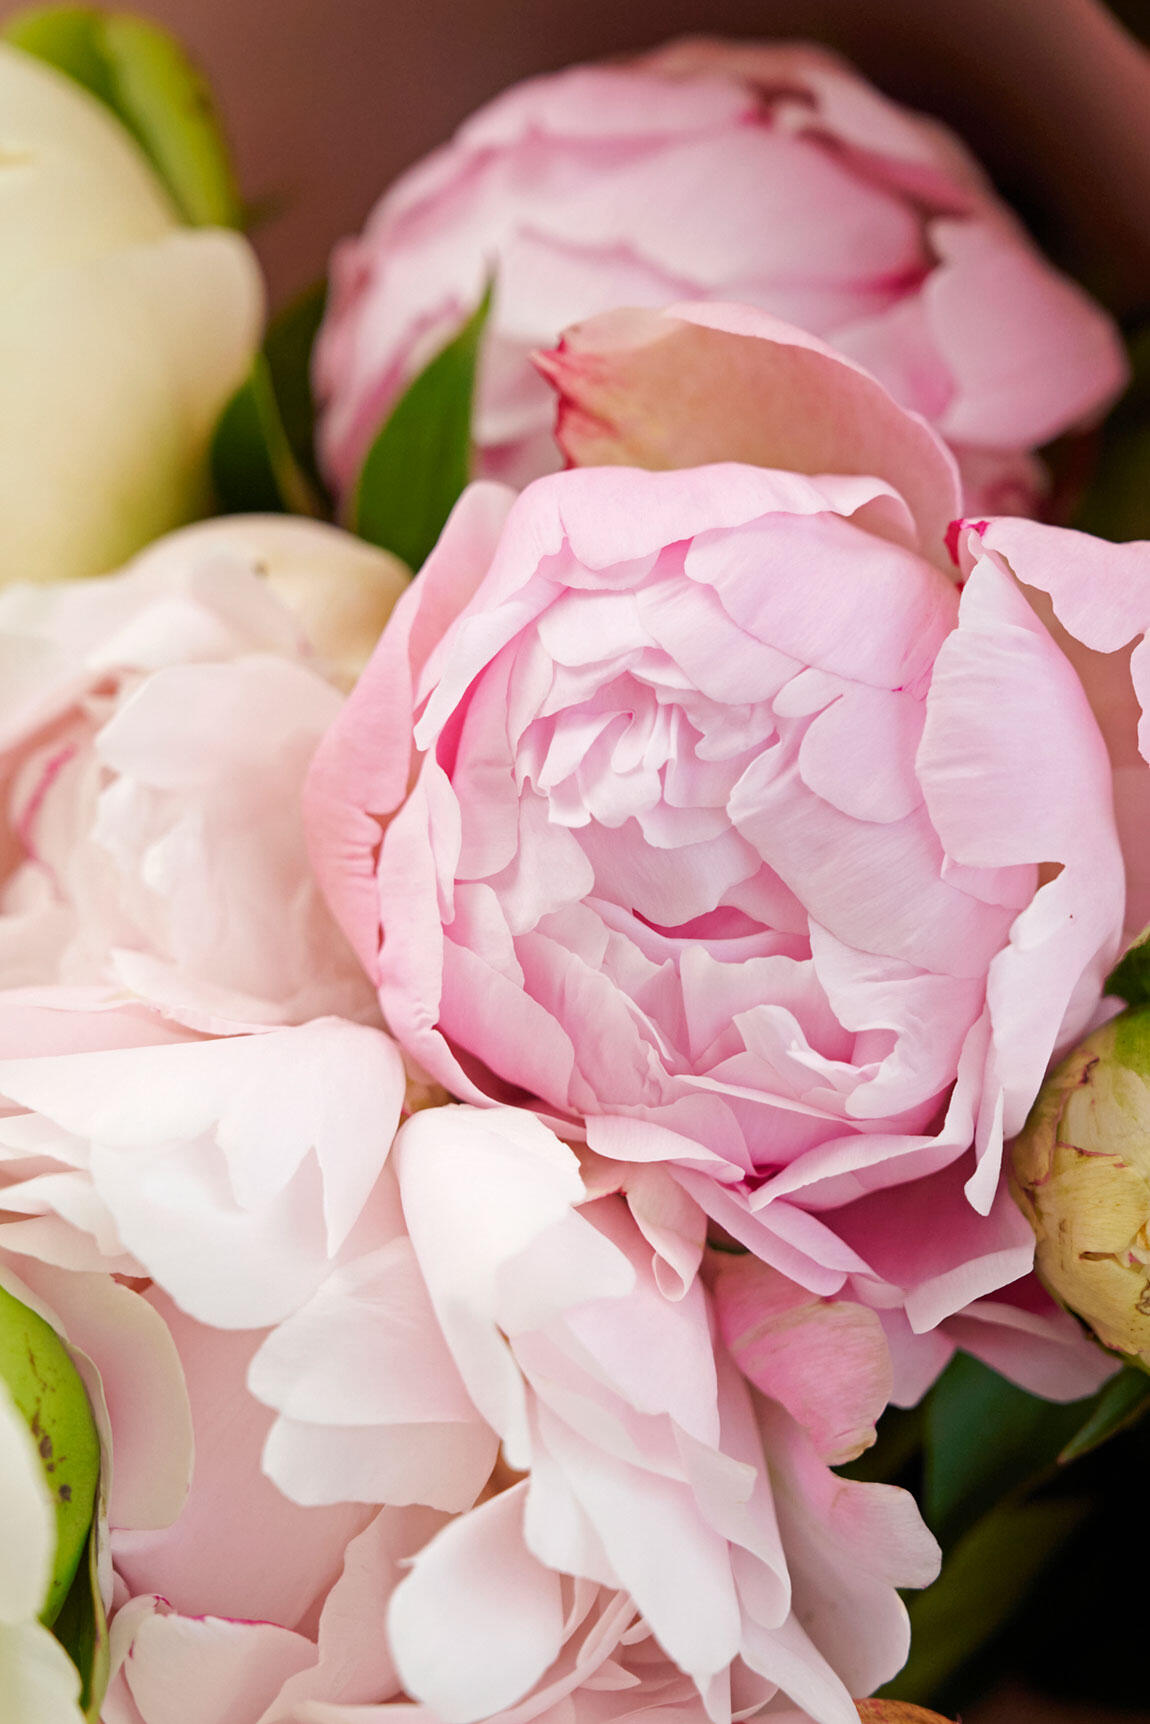 <p>芍薬（シャクヤク）は柔らかい花びらでふんわりと丸まった花形が特徴です。</p>